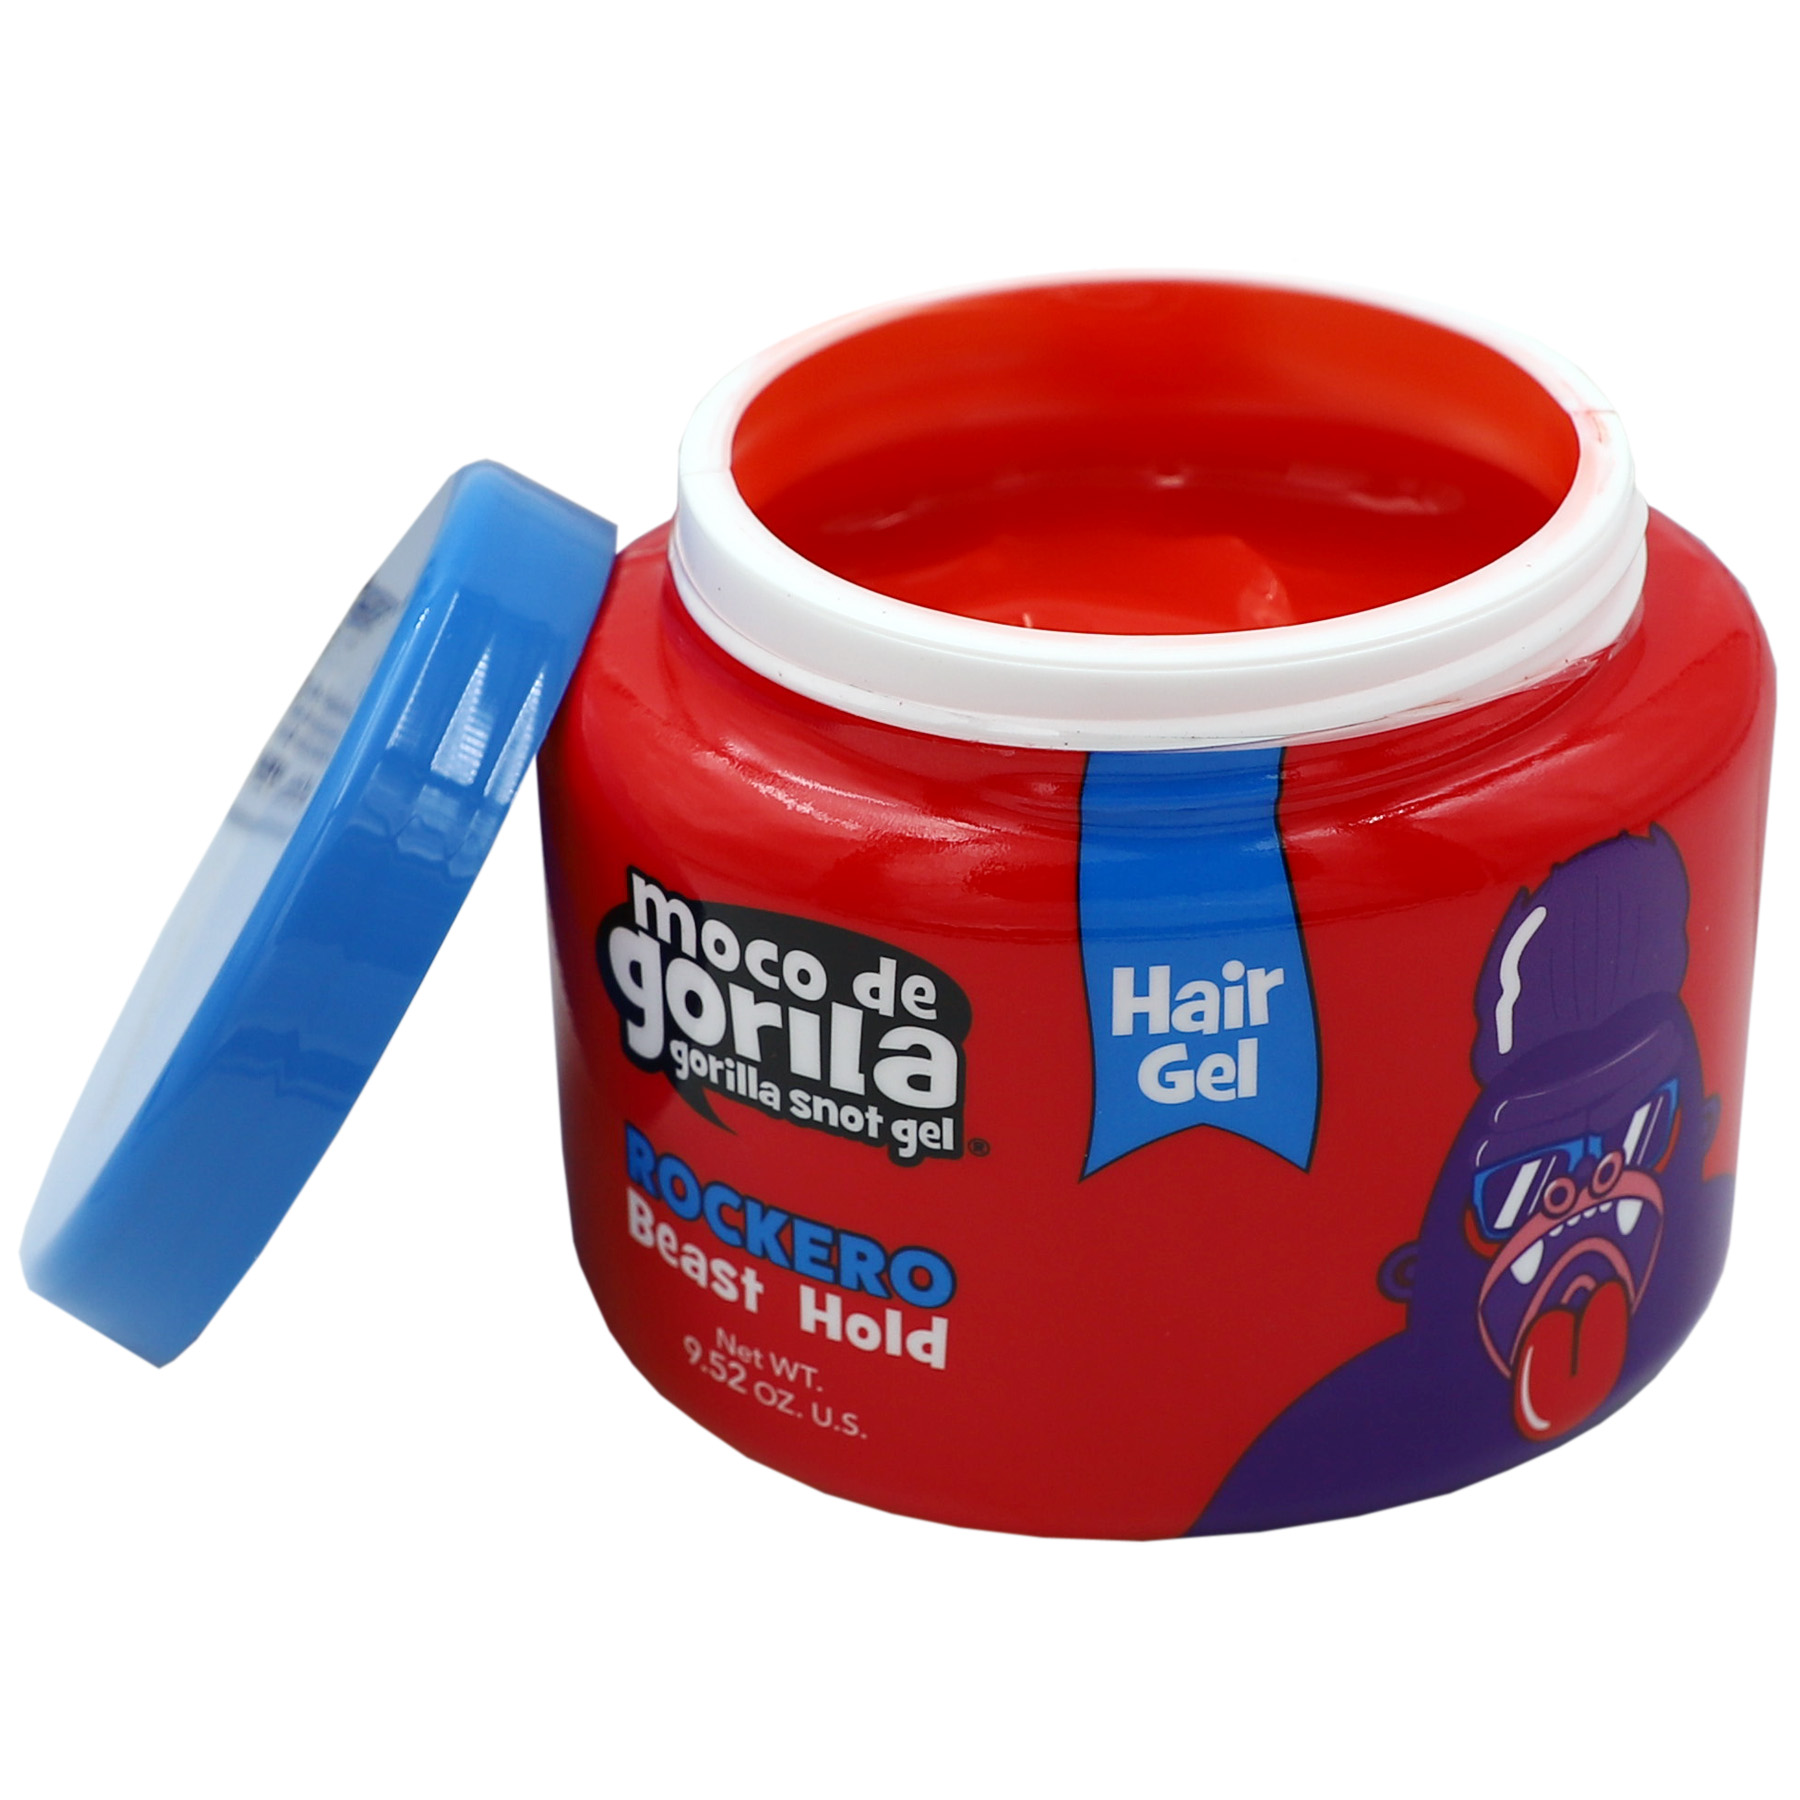 Moco de Gorila Rockero Hair Styling Gel, Long Lasting Hold Unisex 9.52 oz Jar - image 4 of 8